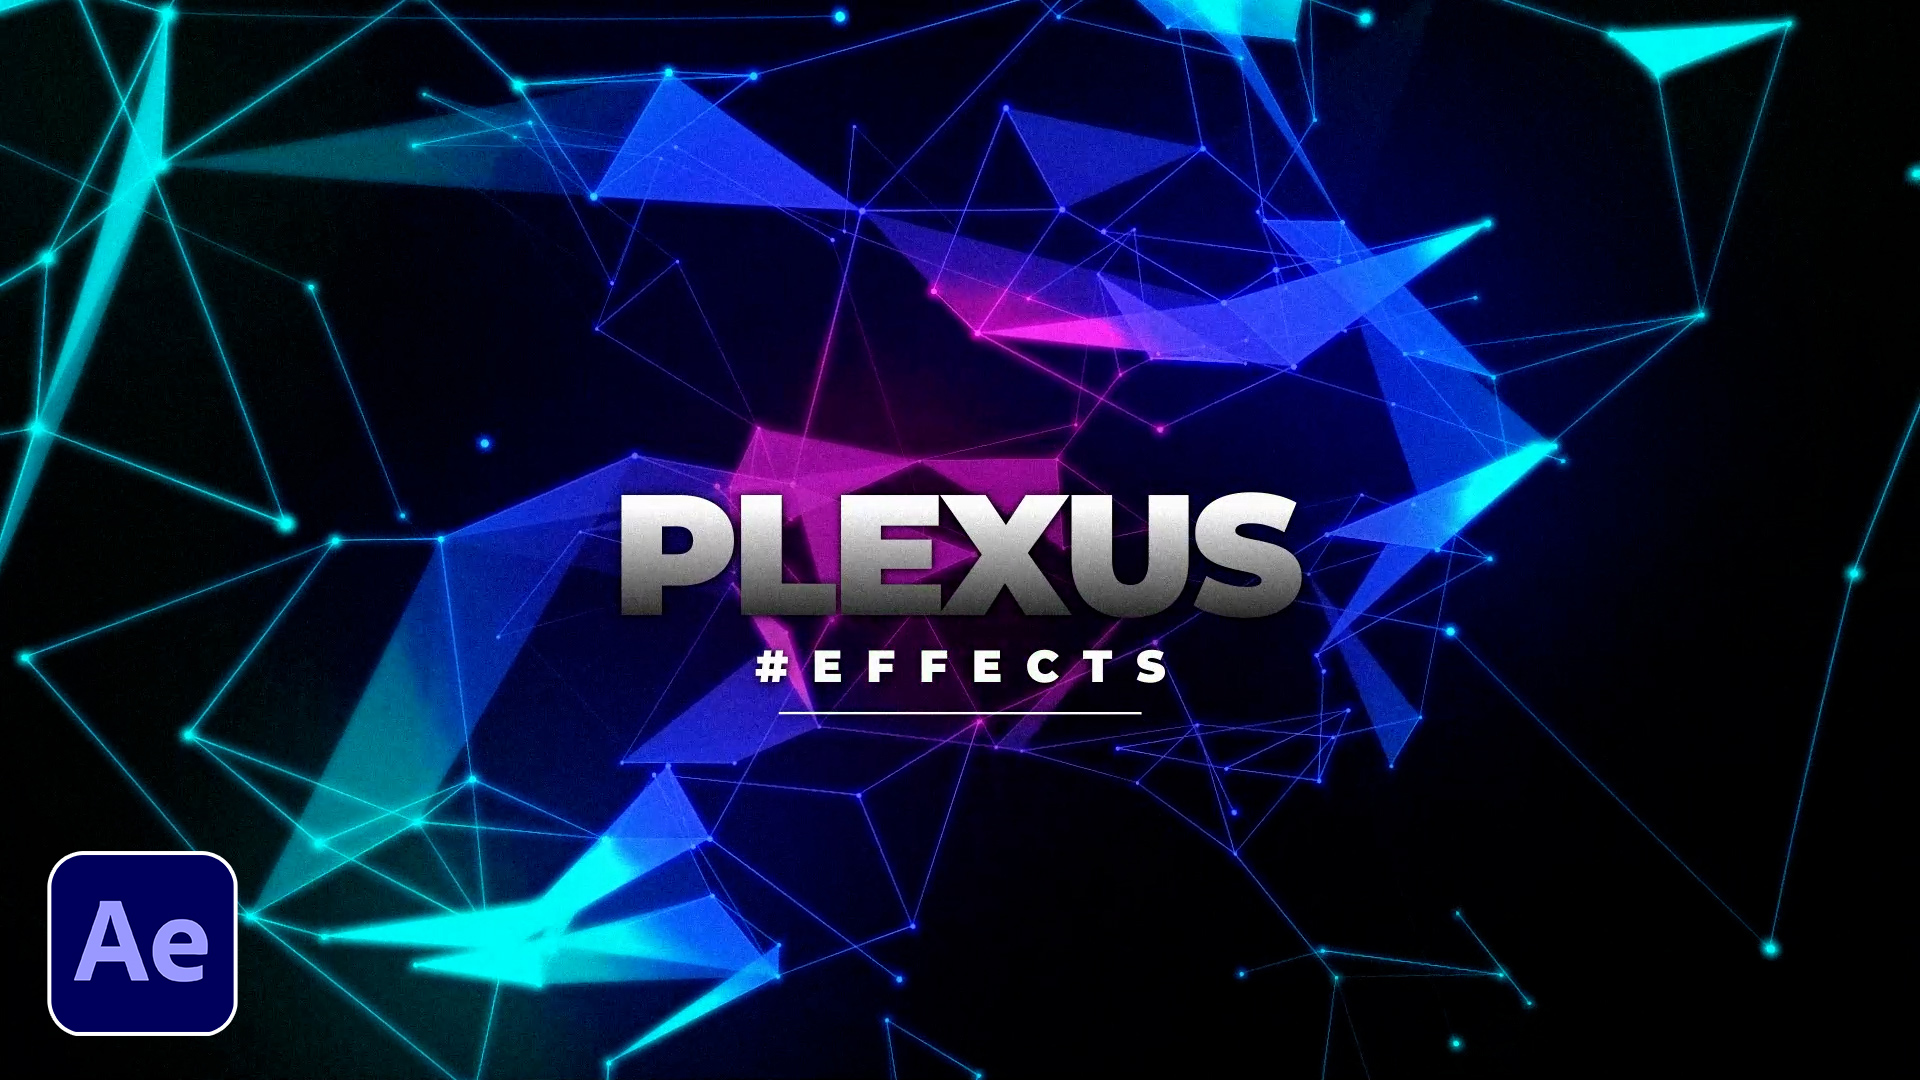 plexus after effects cc download